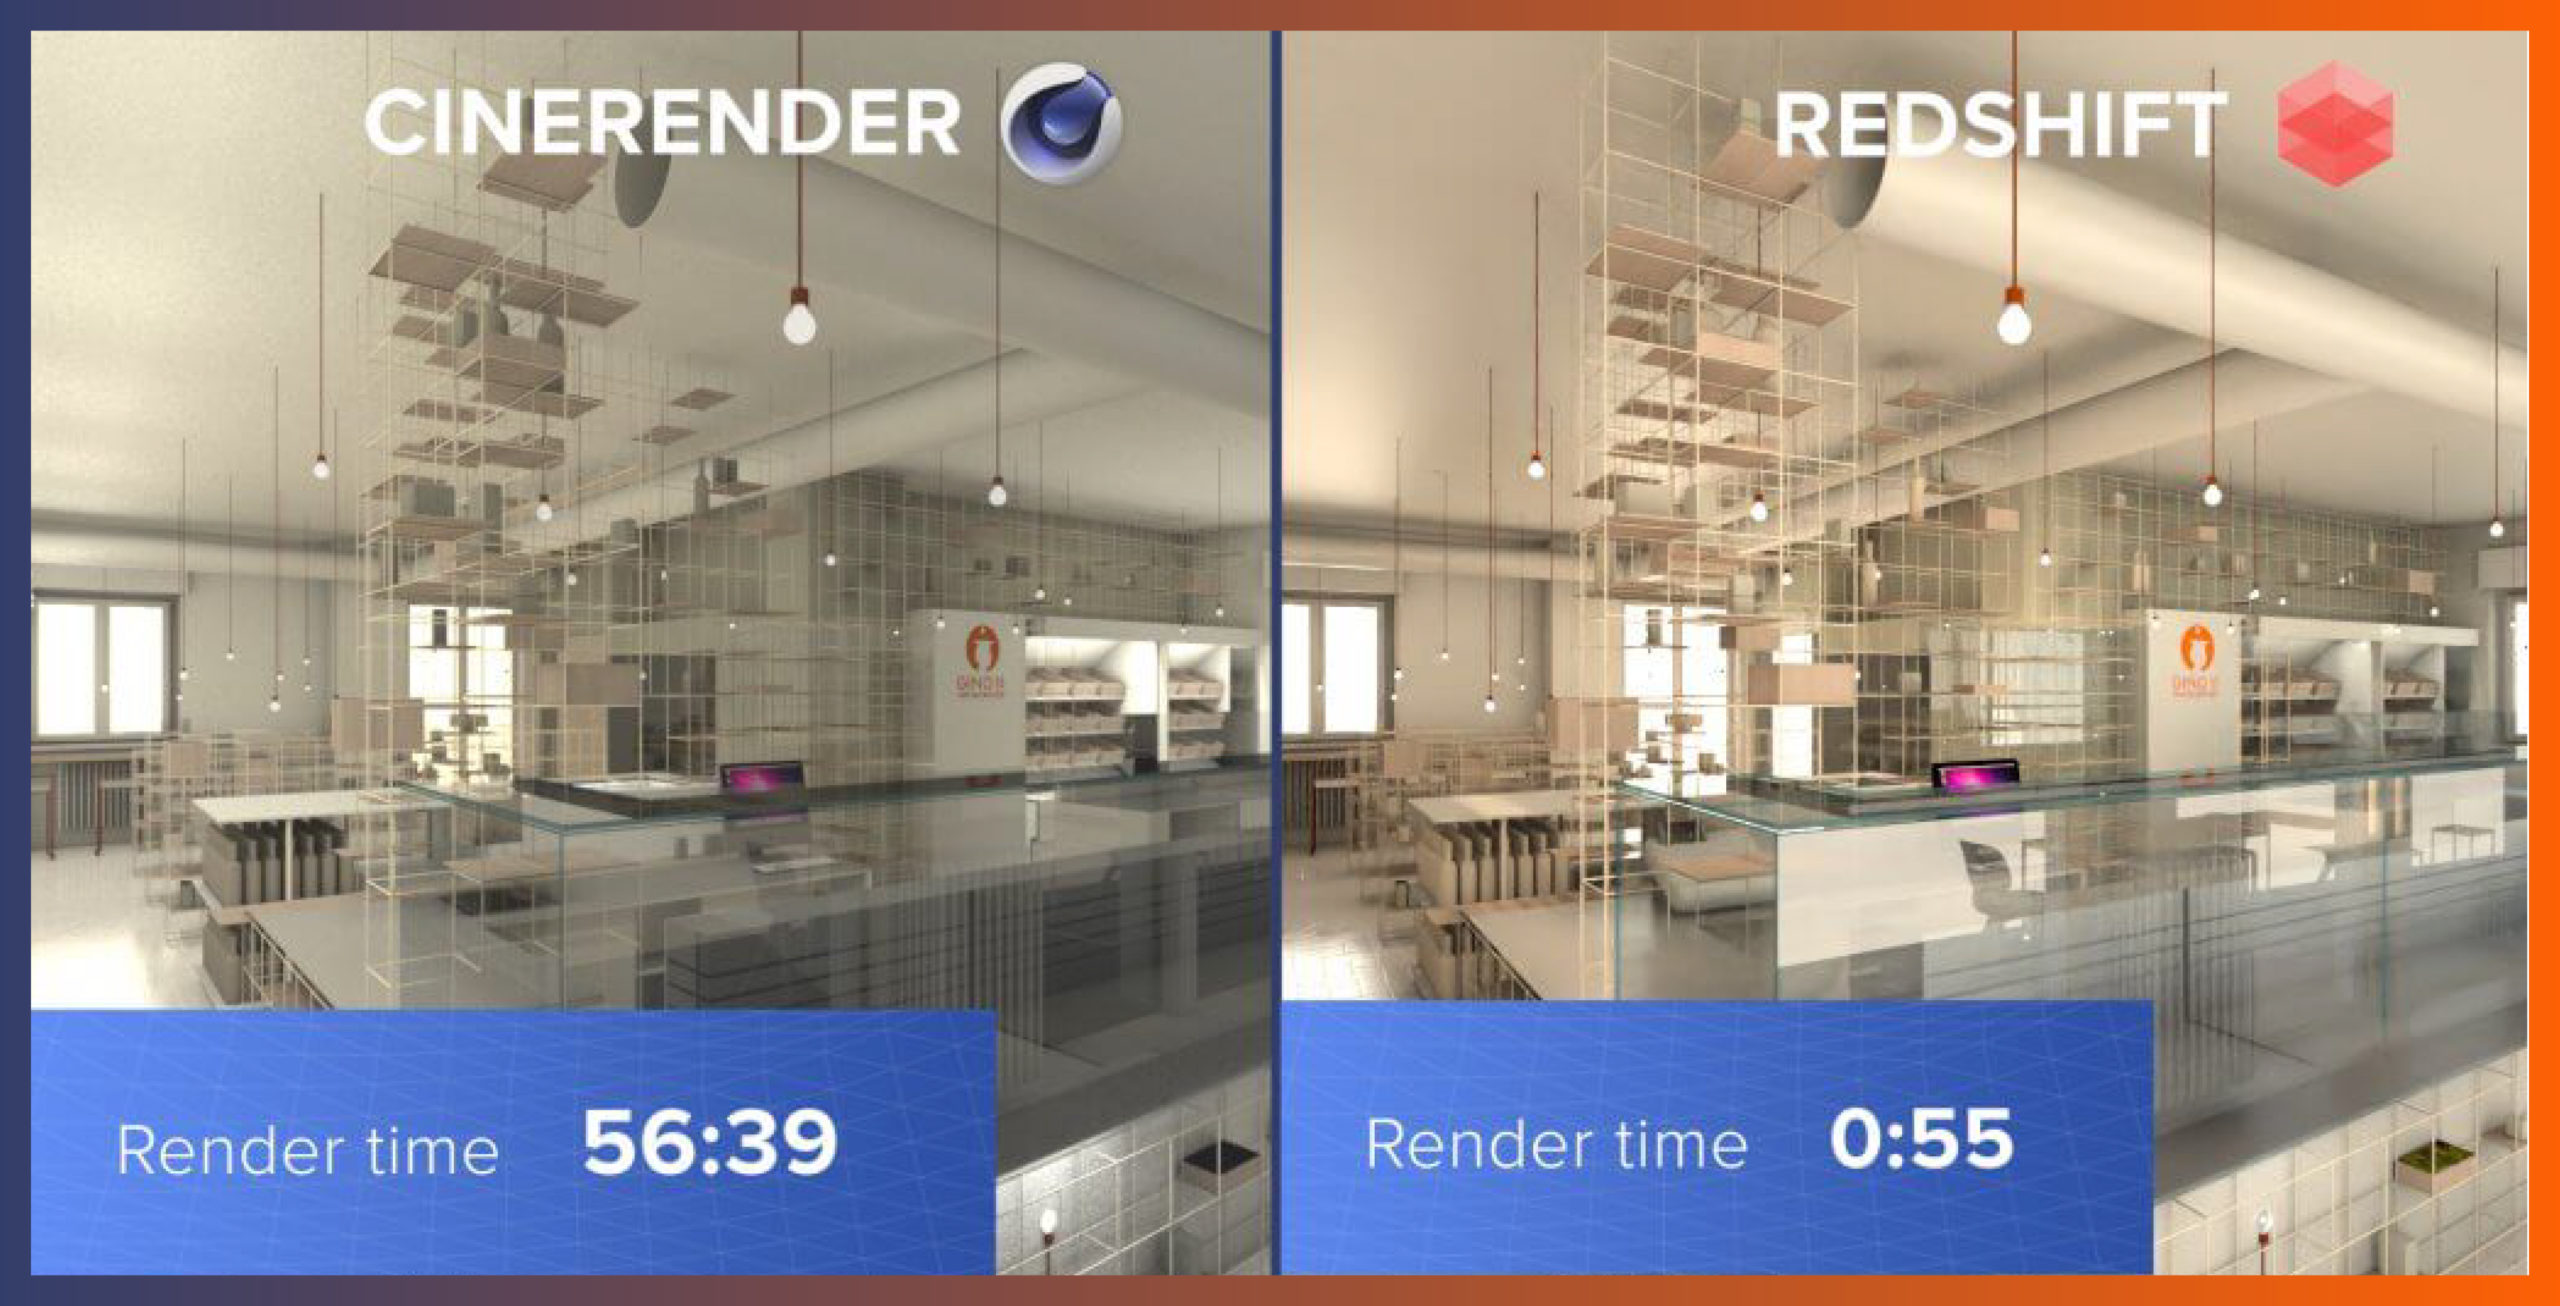 Redshift - ARCHICAD - ARCHICAD 25 - RENDERING - maxon - motore di rendering - rendering biased - gpu - rendering realistici - software rendering - software rendering realistici - graphisoft forward - archiclub - servizi graphisoft - rendering fotorealistici